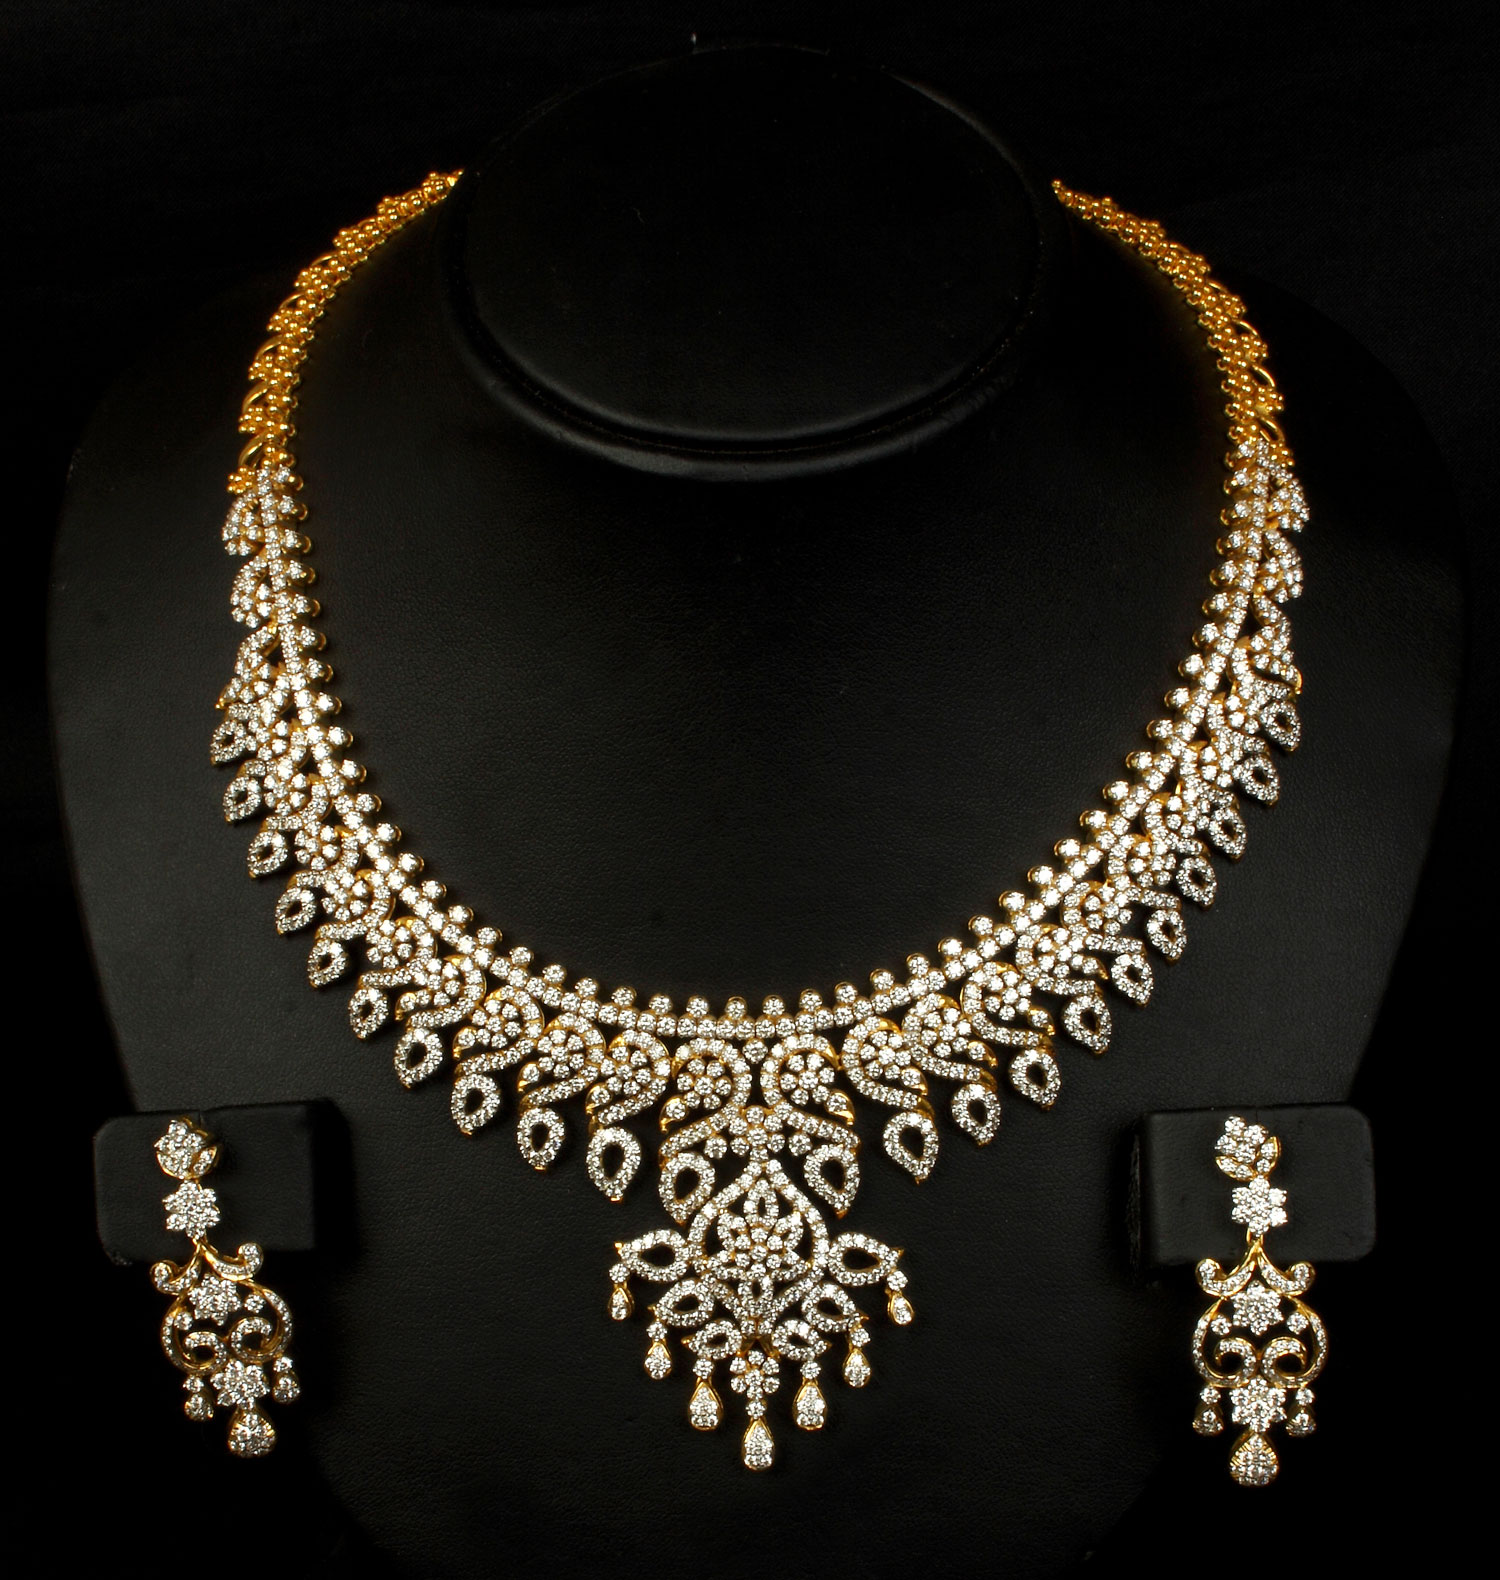 Sale news and Shopping details: VBJ Diamond Necklace Models